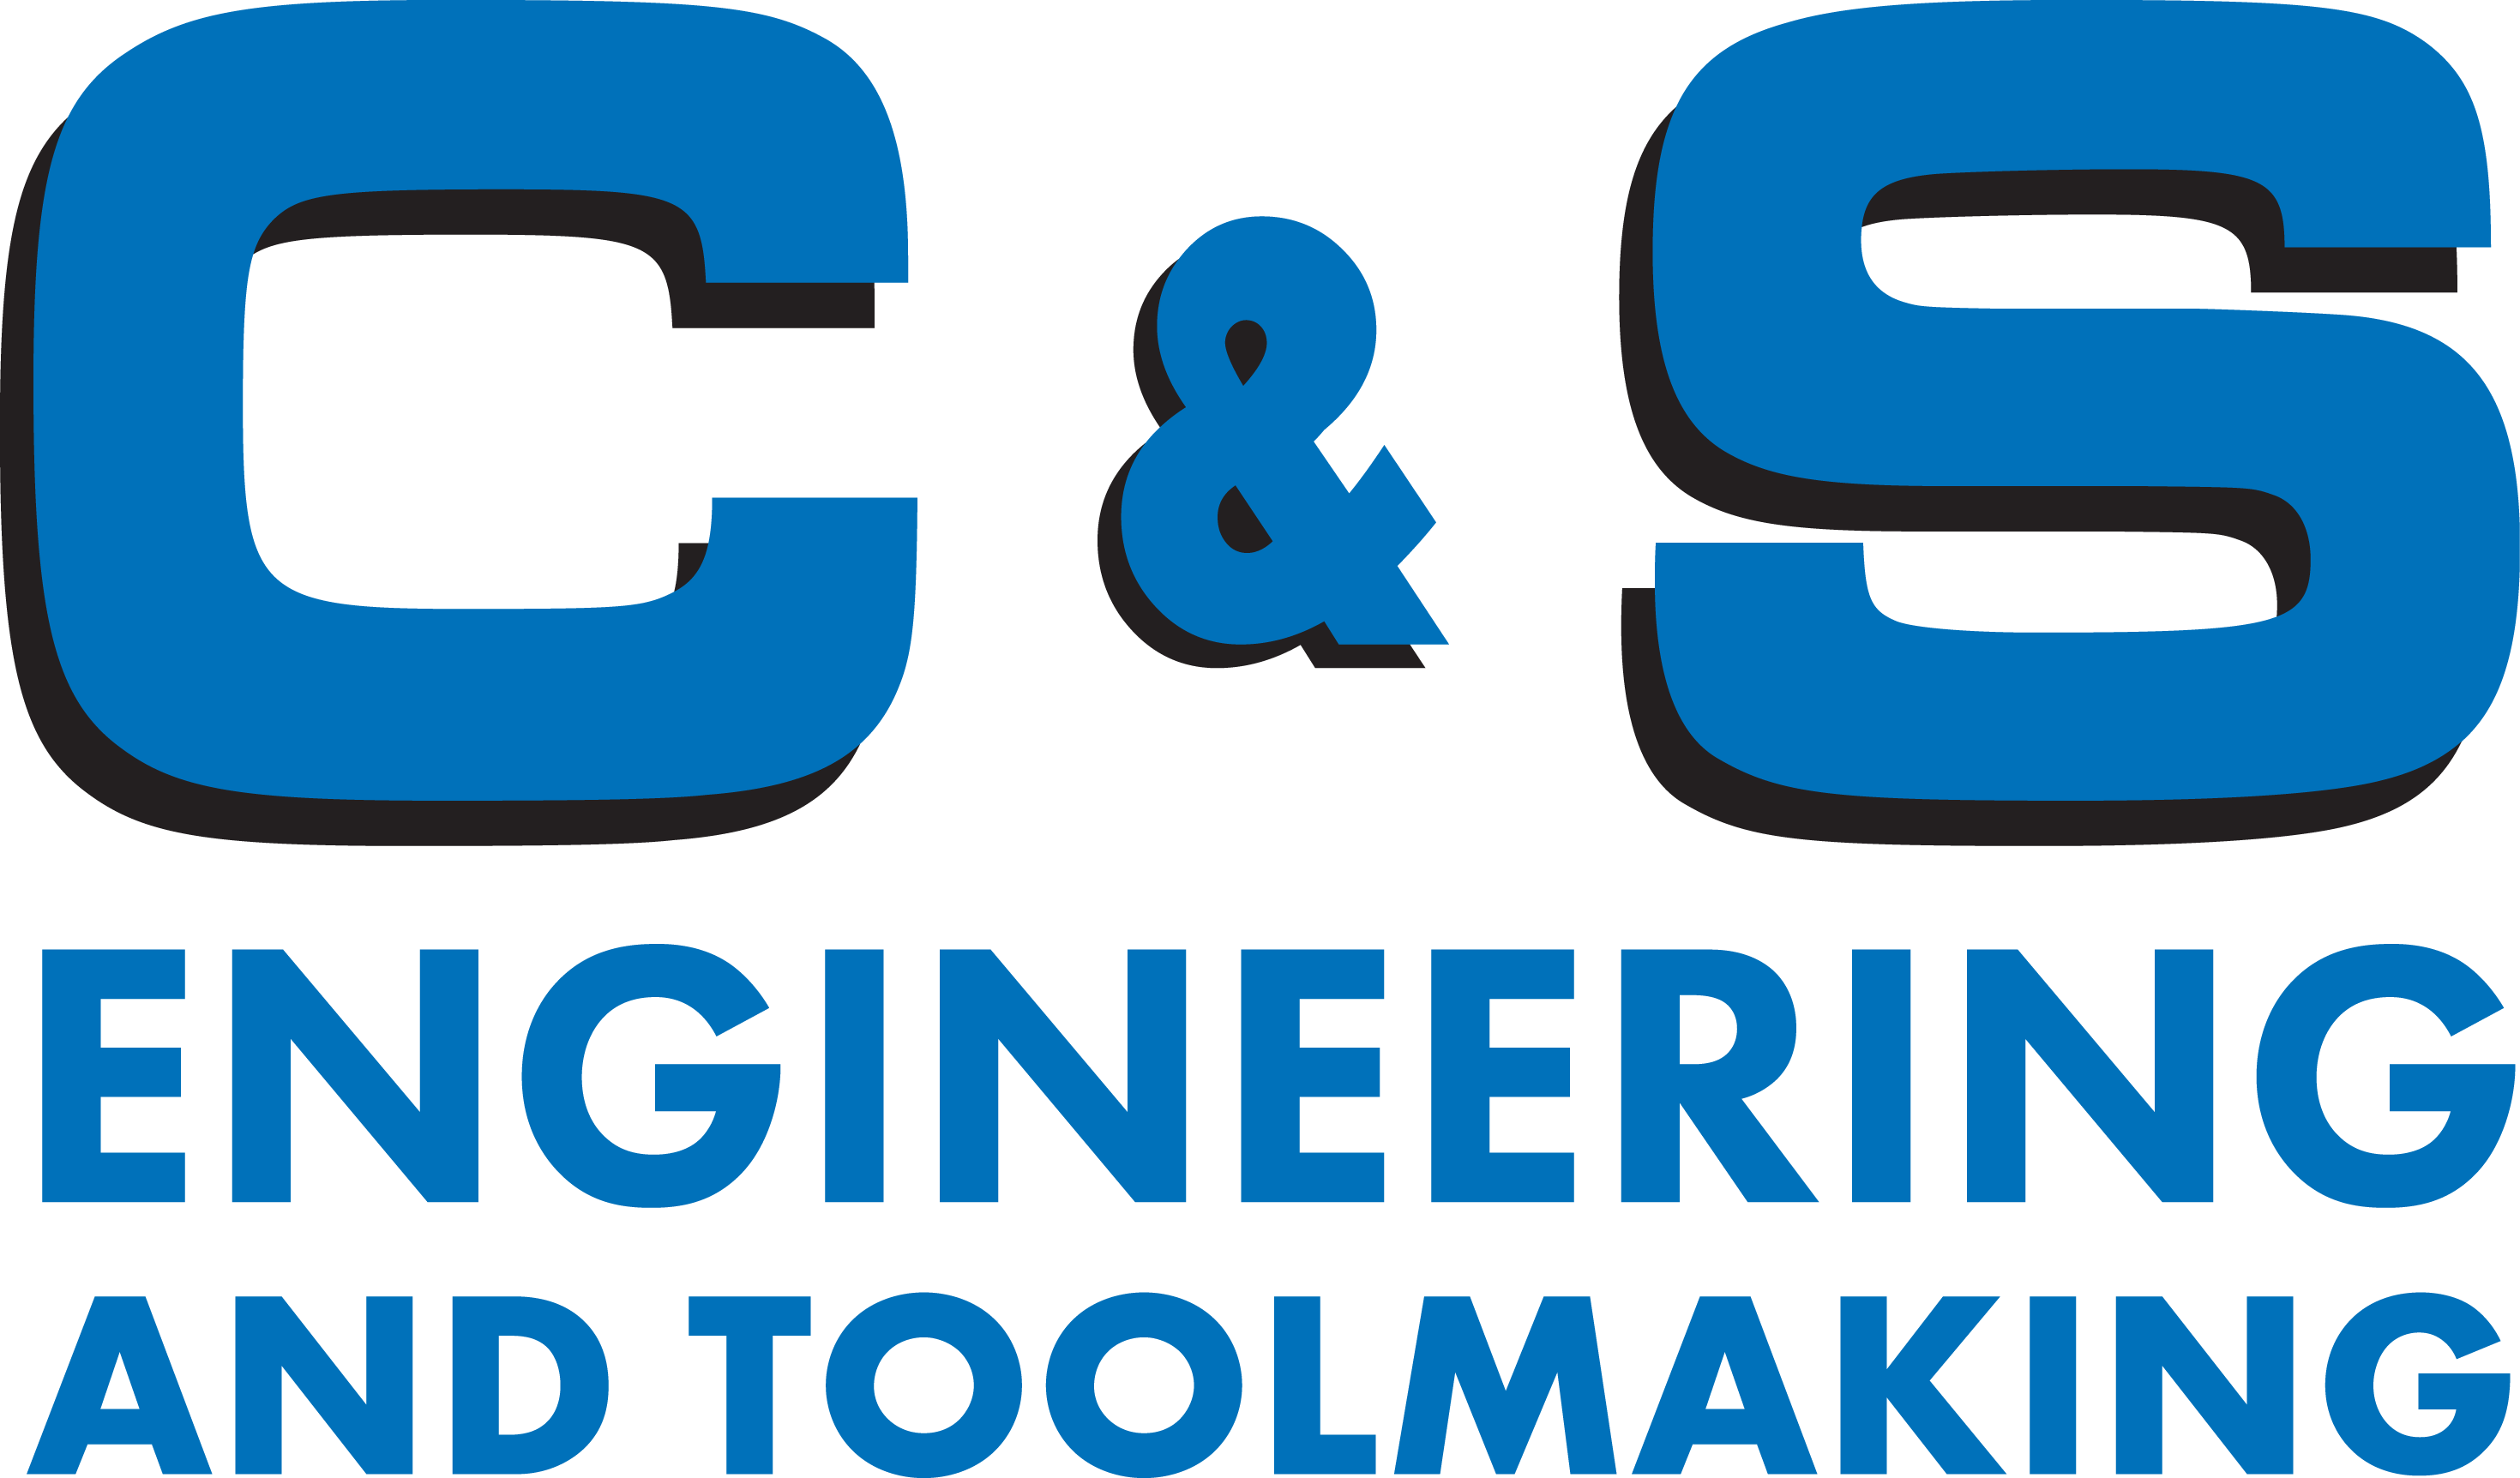 C&S Engineering and Toolmaking